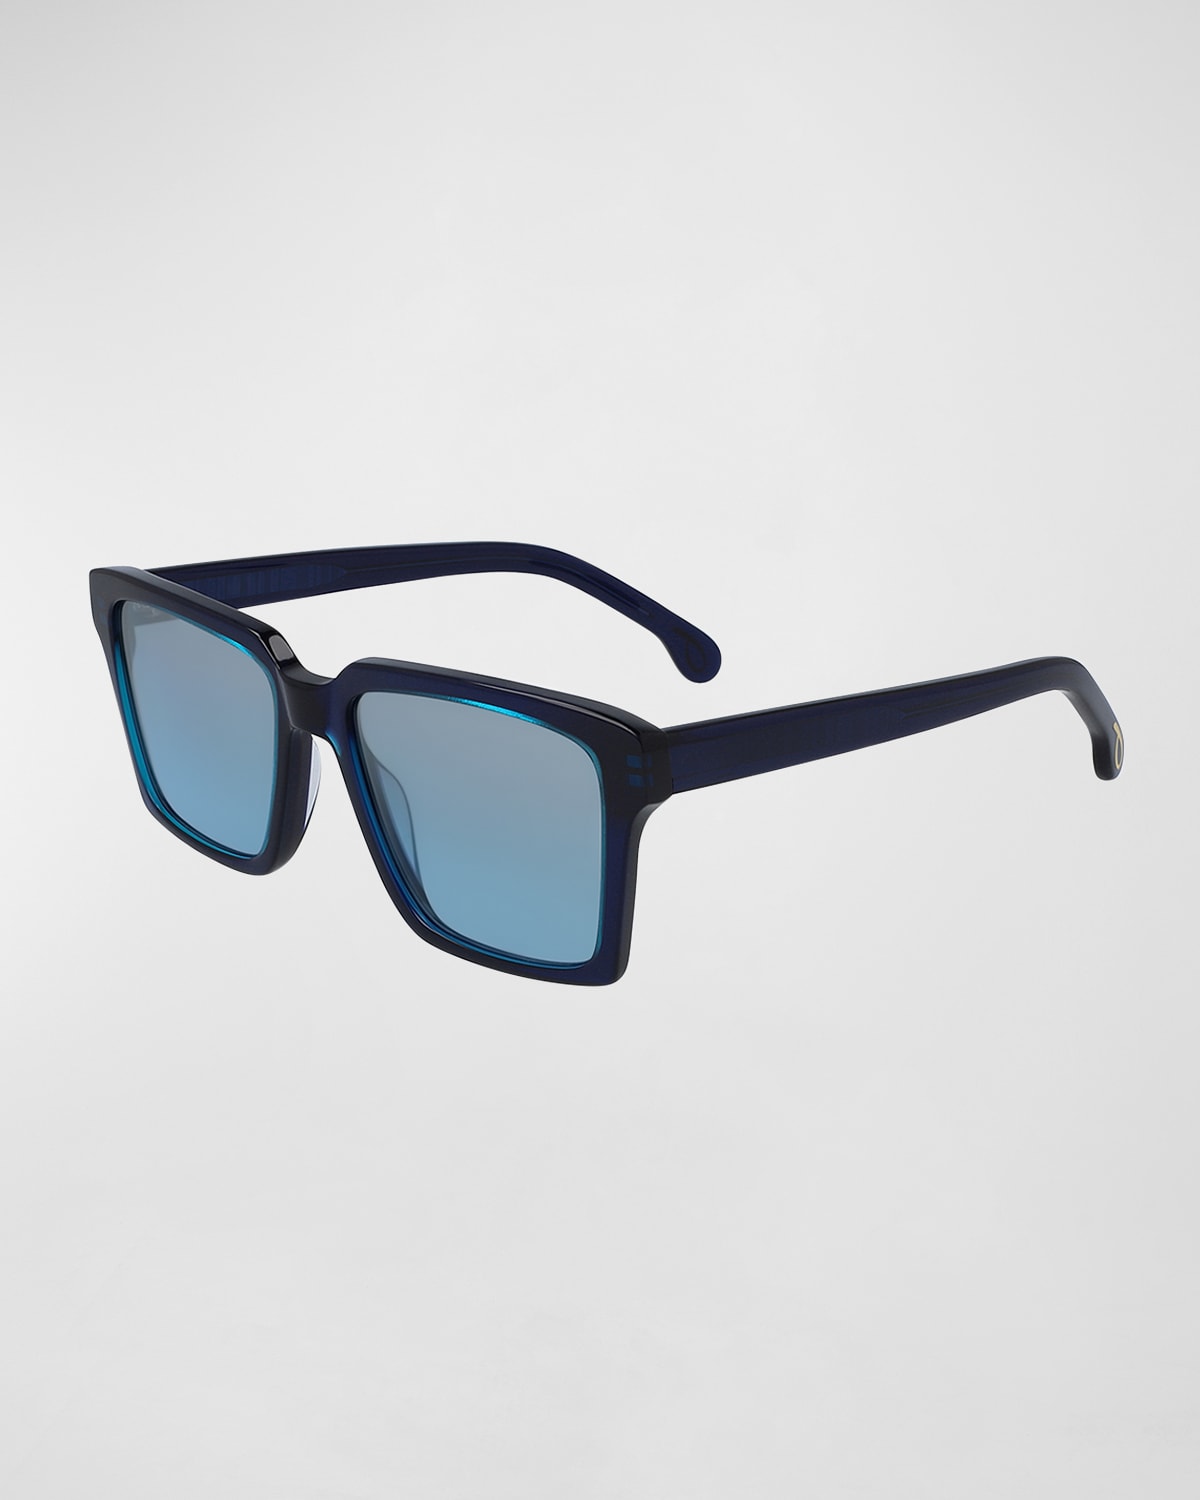 Paul Smith Edison 55mm Square Sunglasses In Blue / Navy